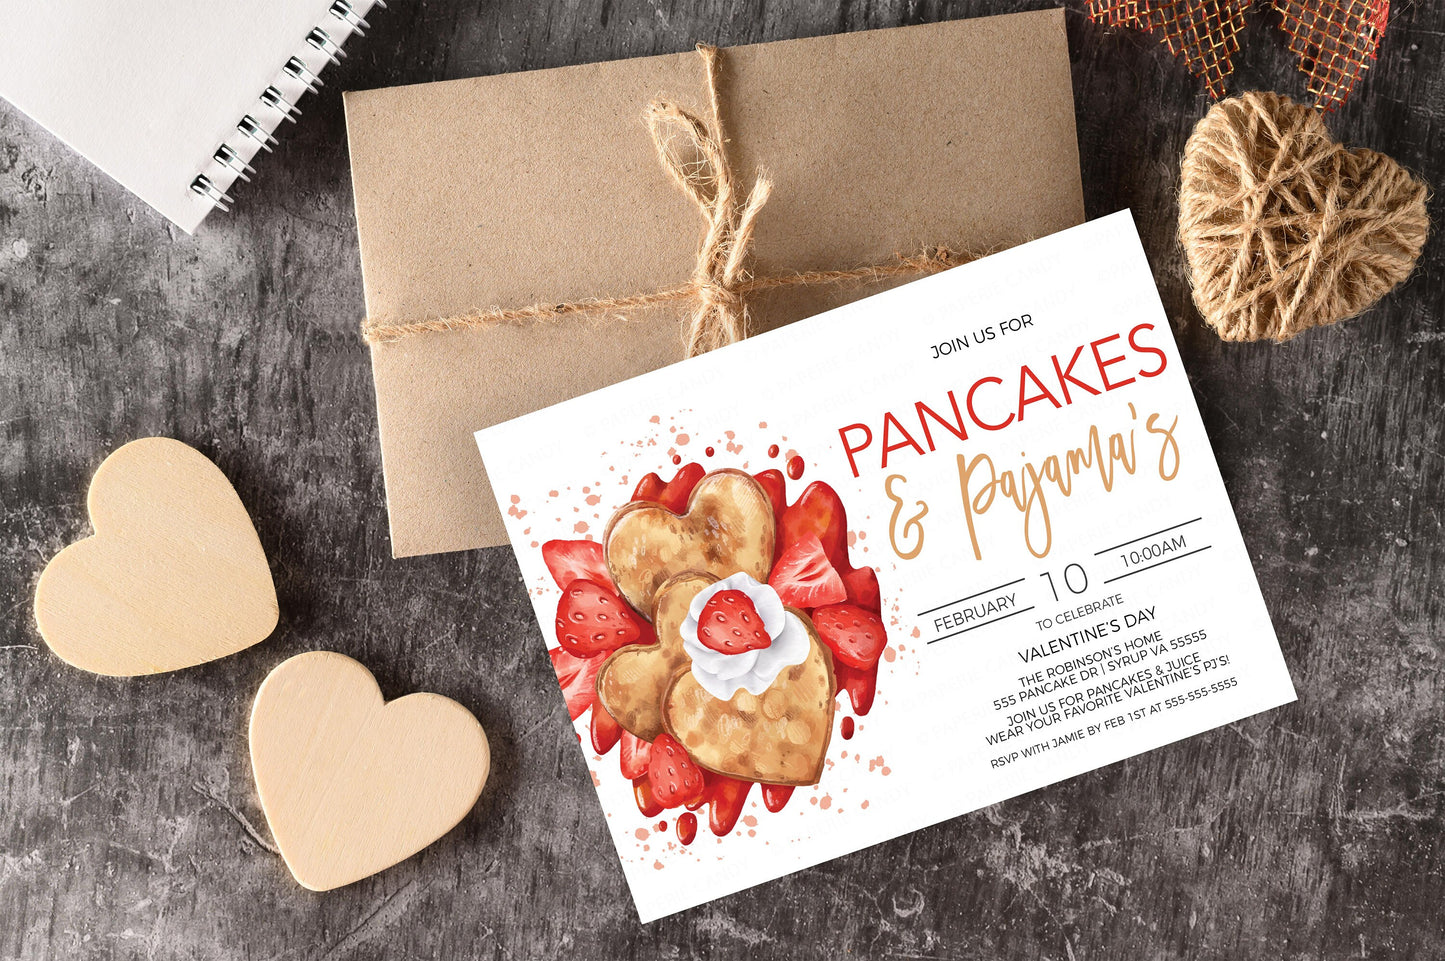 Valentine's Pancakes And Pajamas Invitation, Editable Valentine Pancake PJ Party Invite, Breakfast Brunch Kids Party, Editable Printable